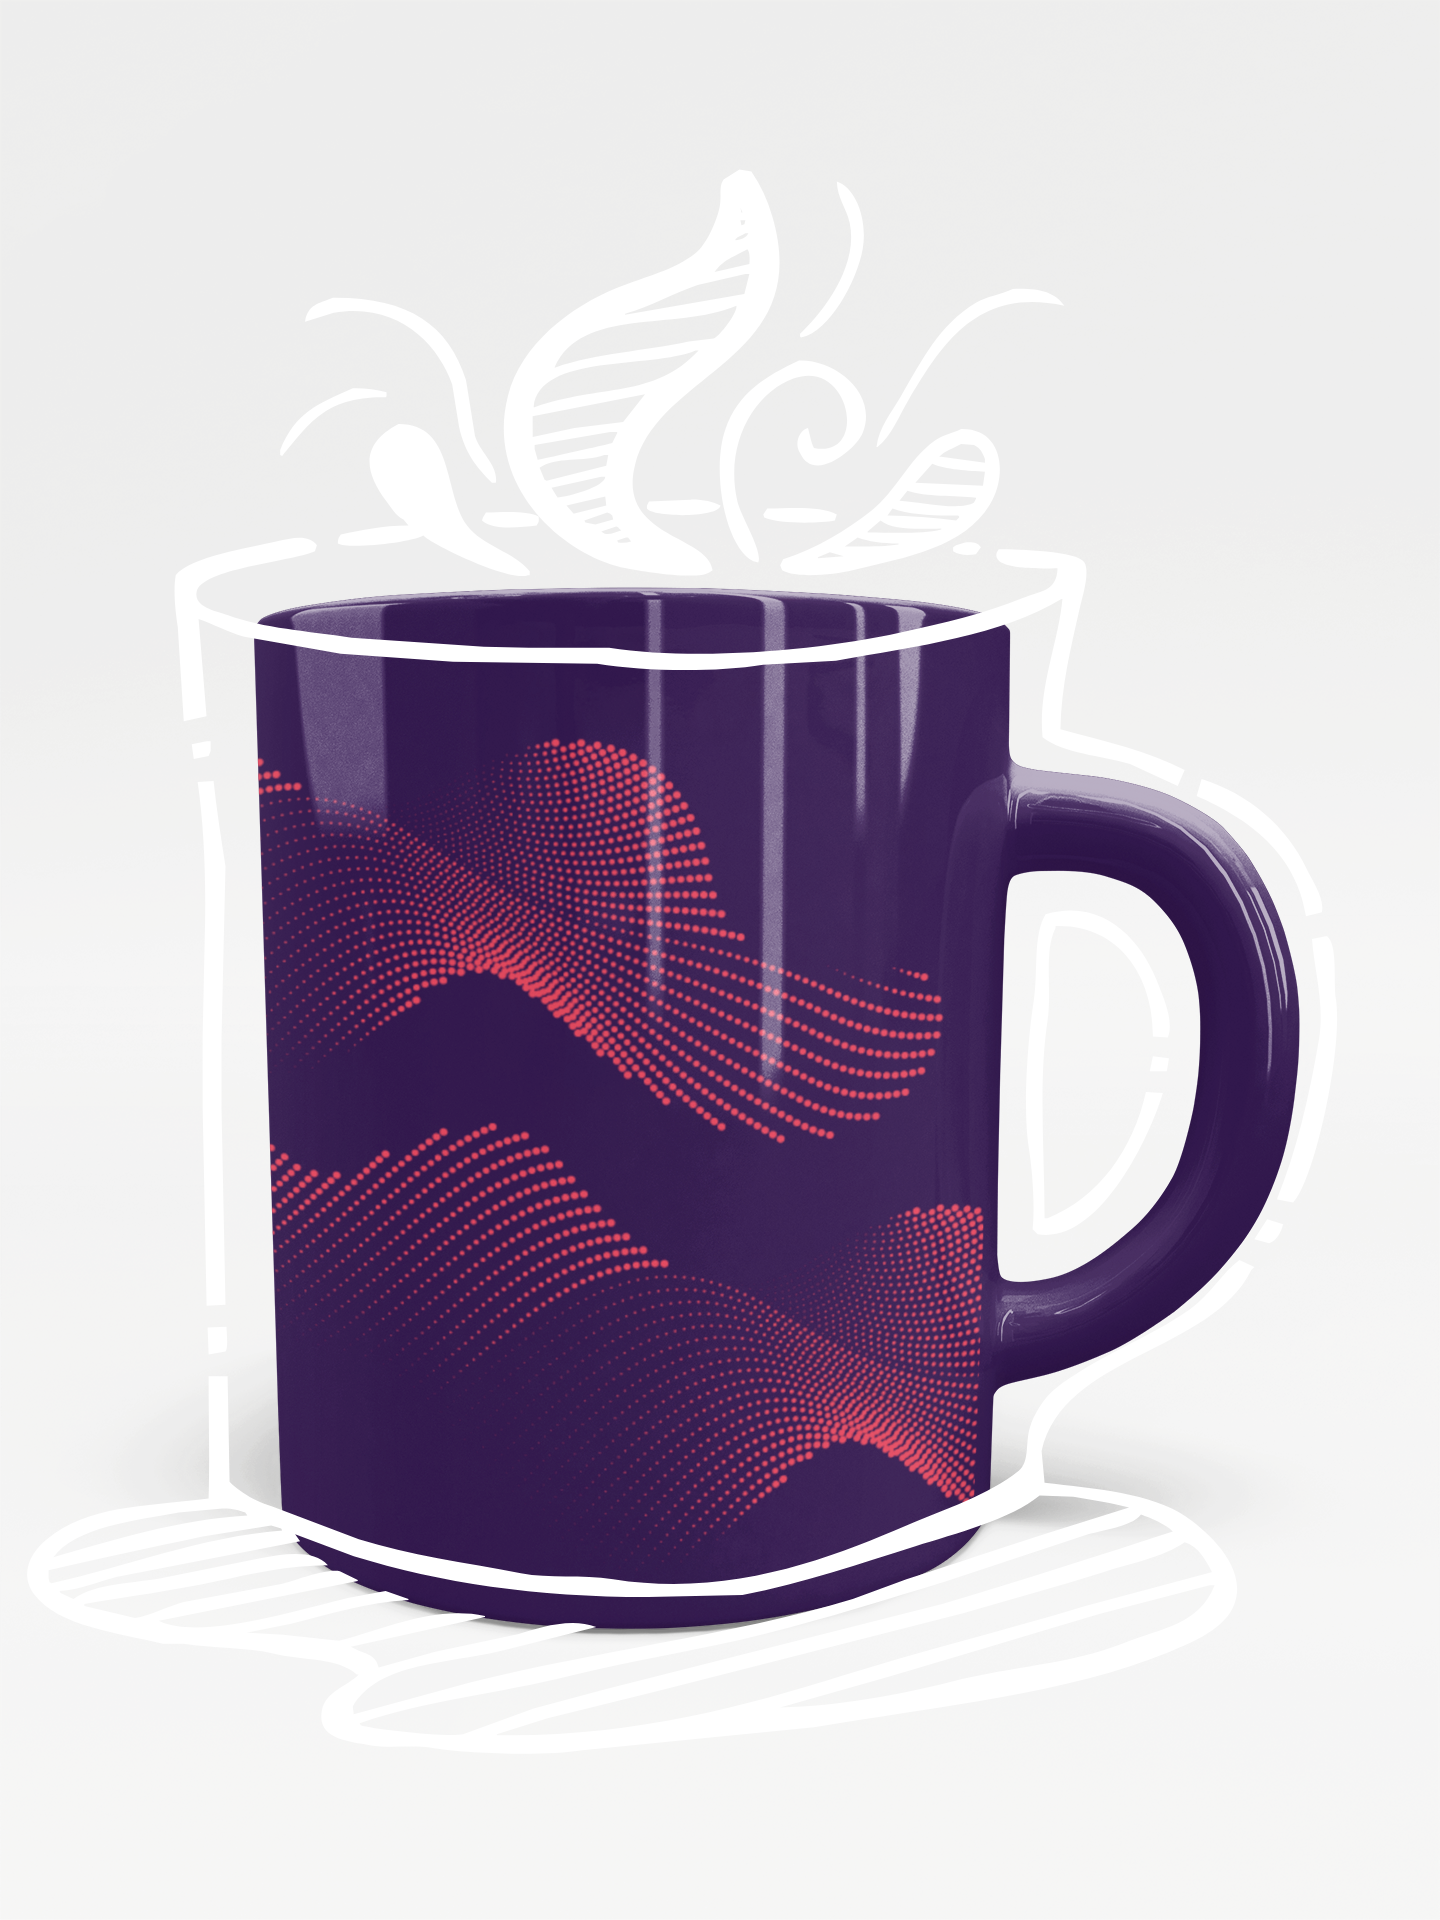 mockup-of-an-11-oz-coffee-mug-in-a-customizable-scenario-1518-el.png